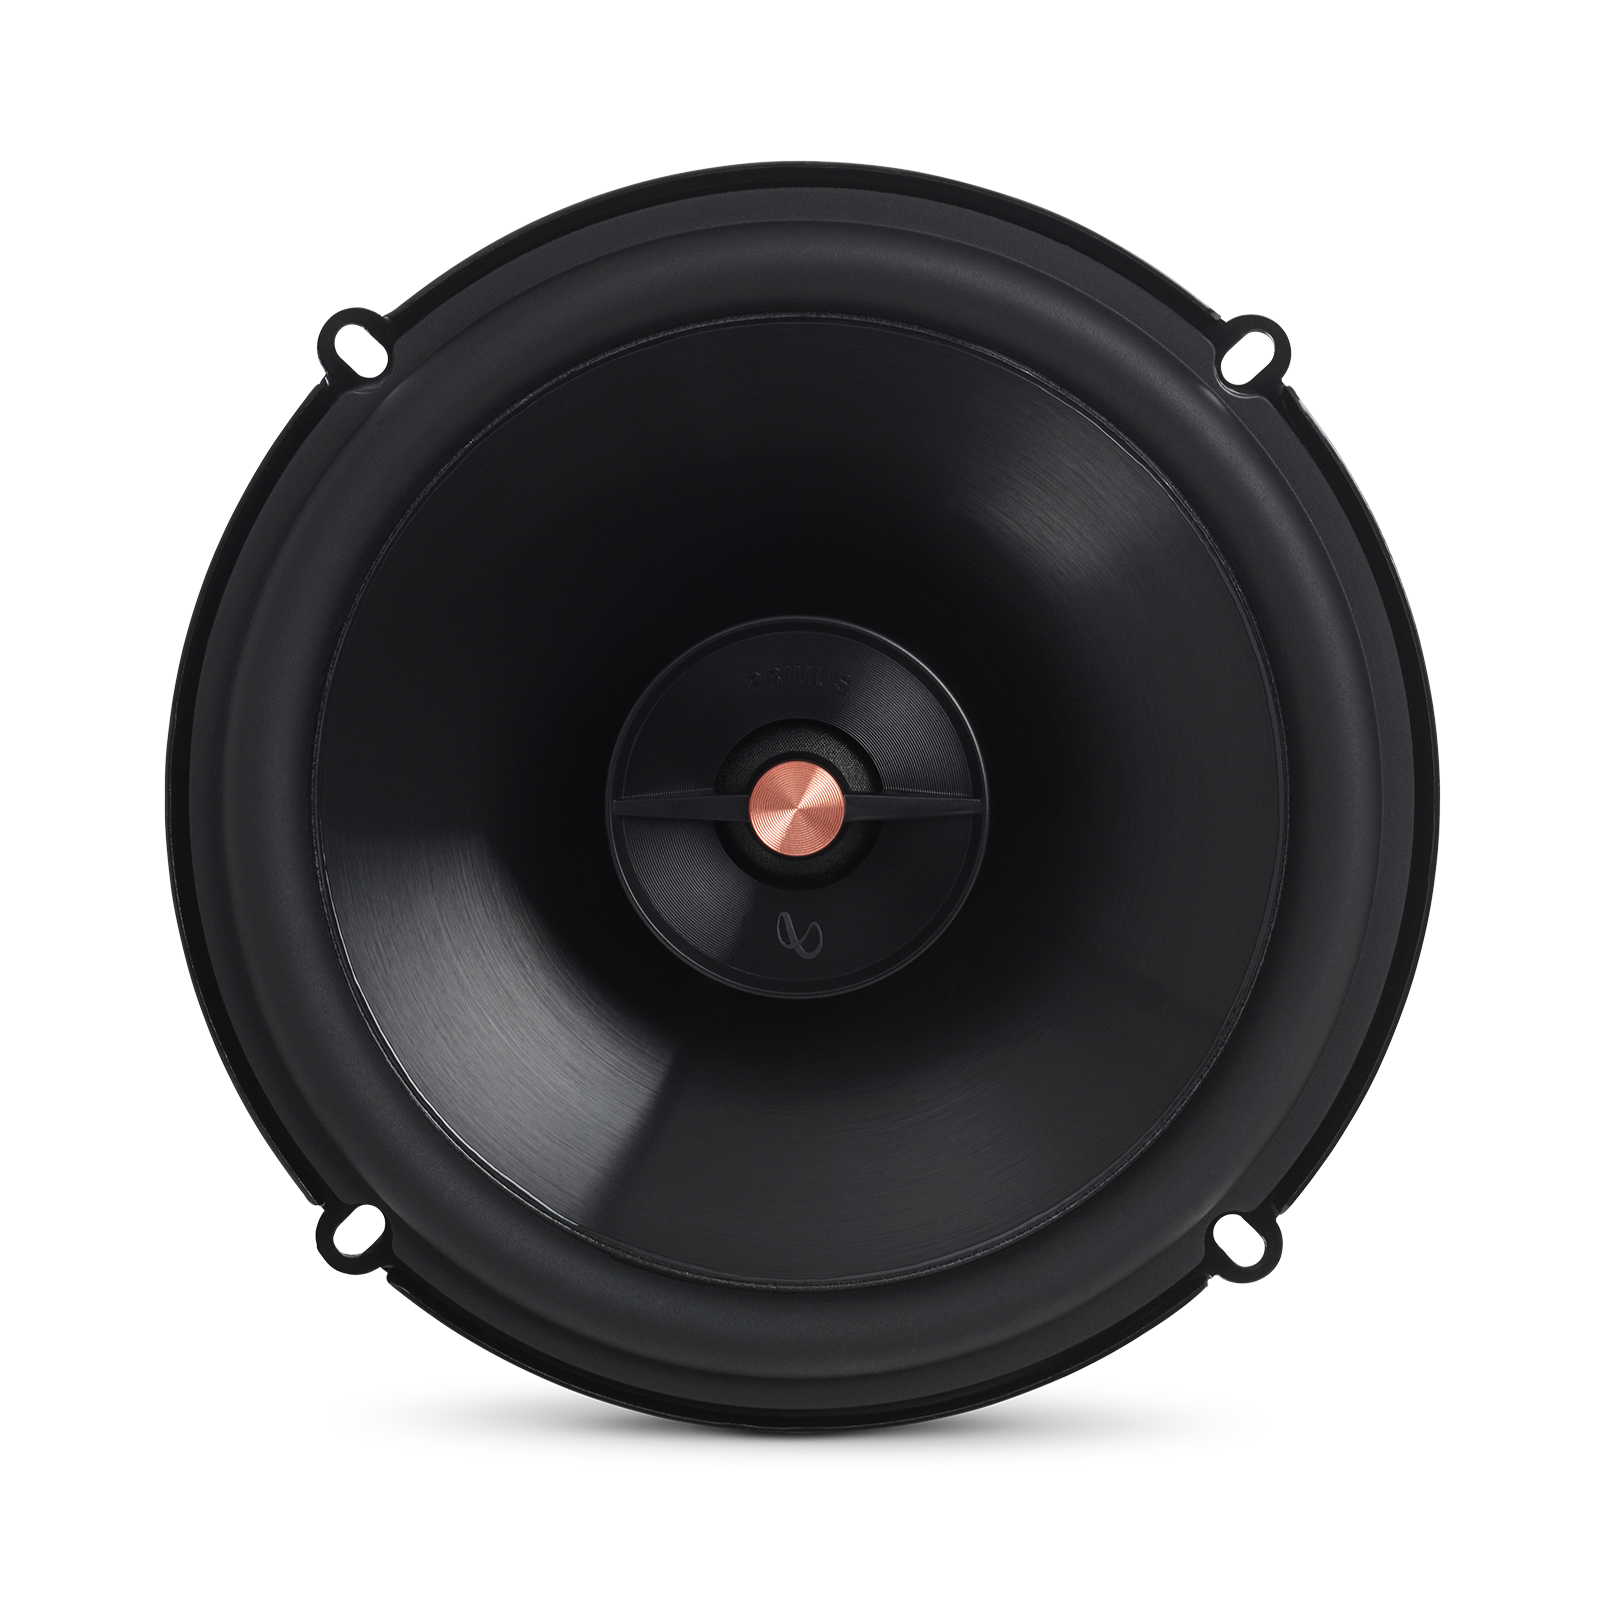 PR6512IS - Black - 6-1/2" (160mm) two-way multielement speaker - Front